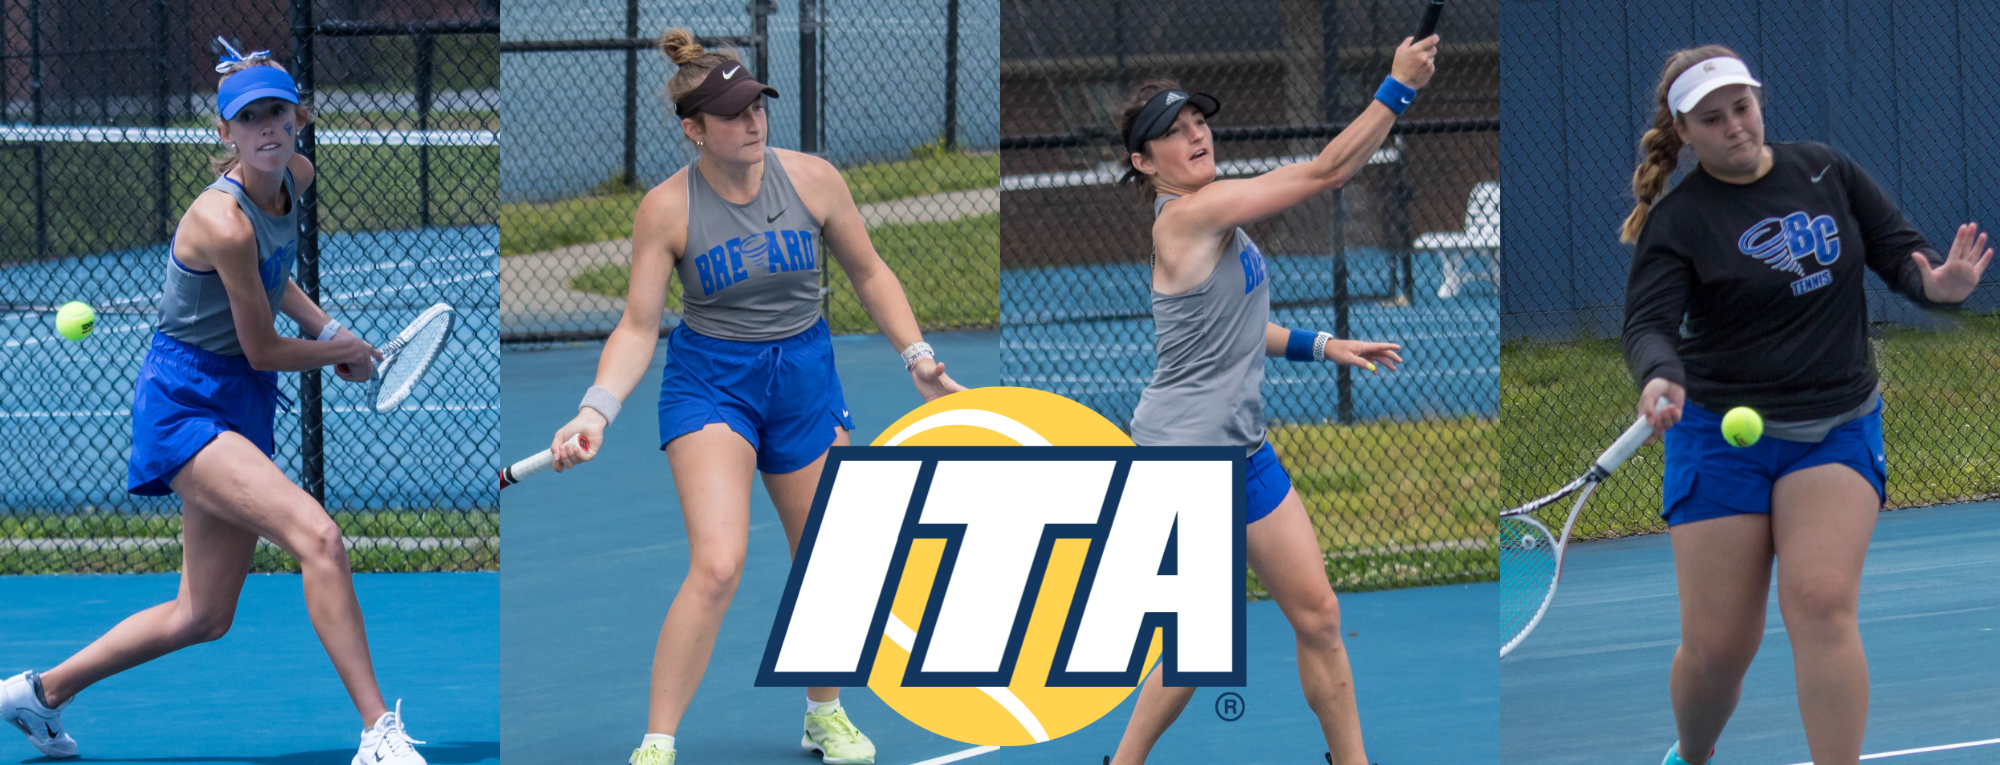 Four Tornados Earn ITA Scholar-Athlete Honors, BC Women’s Tennis Selected as an All-Academic Team